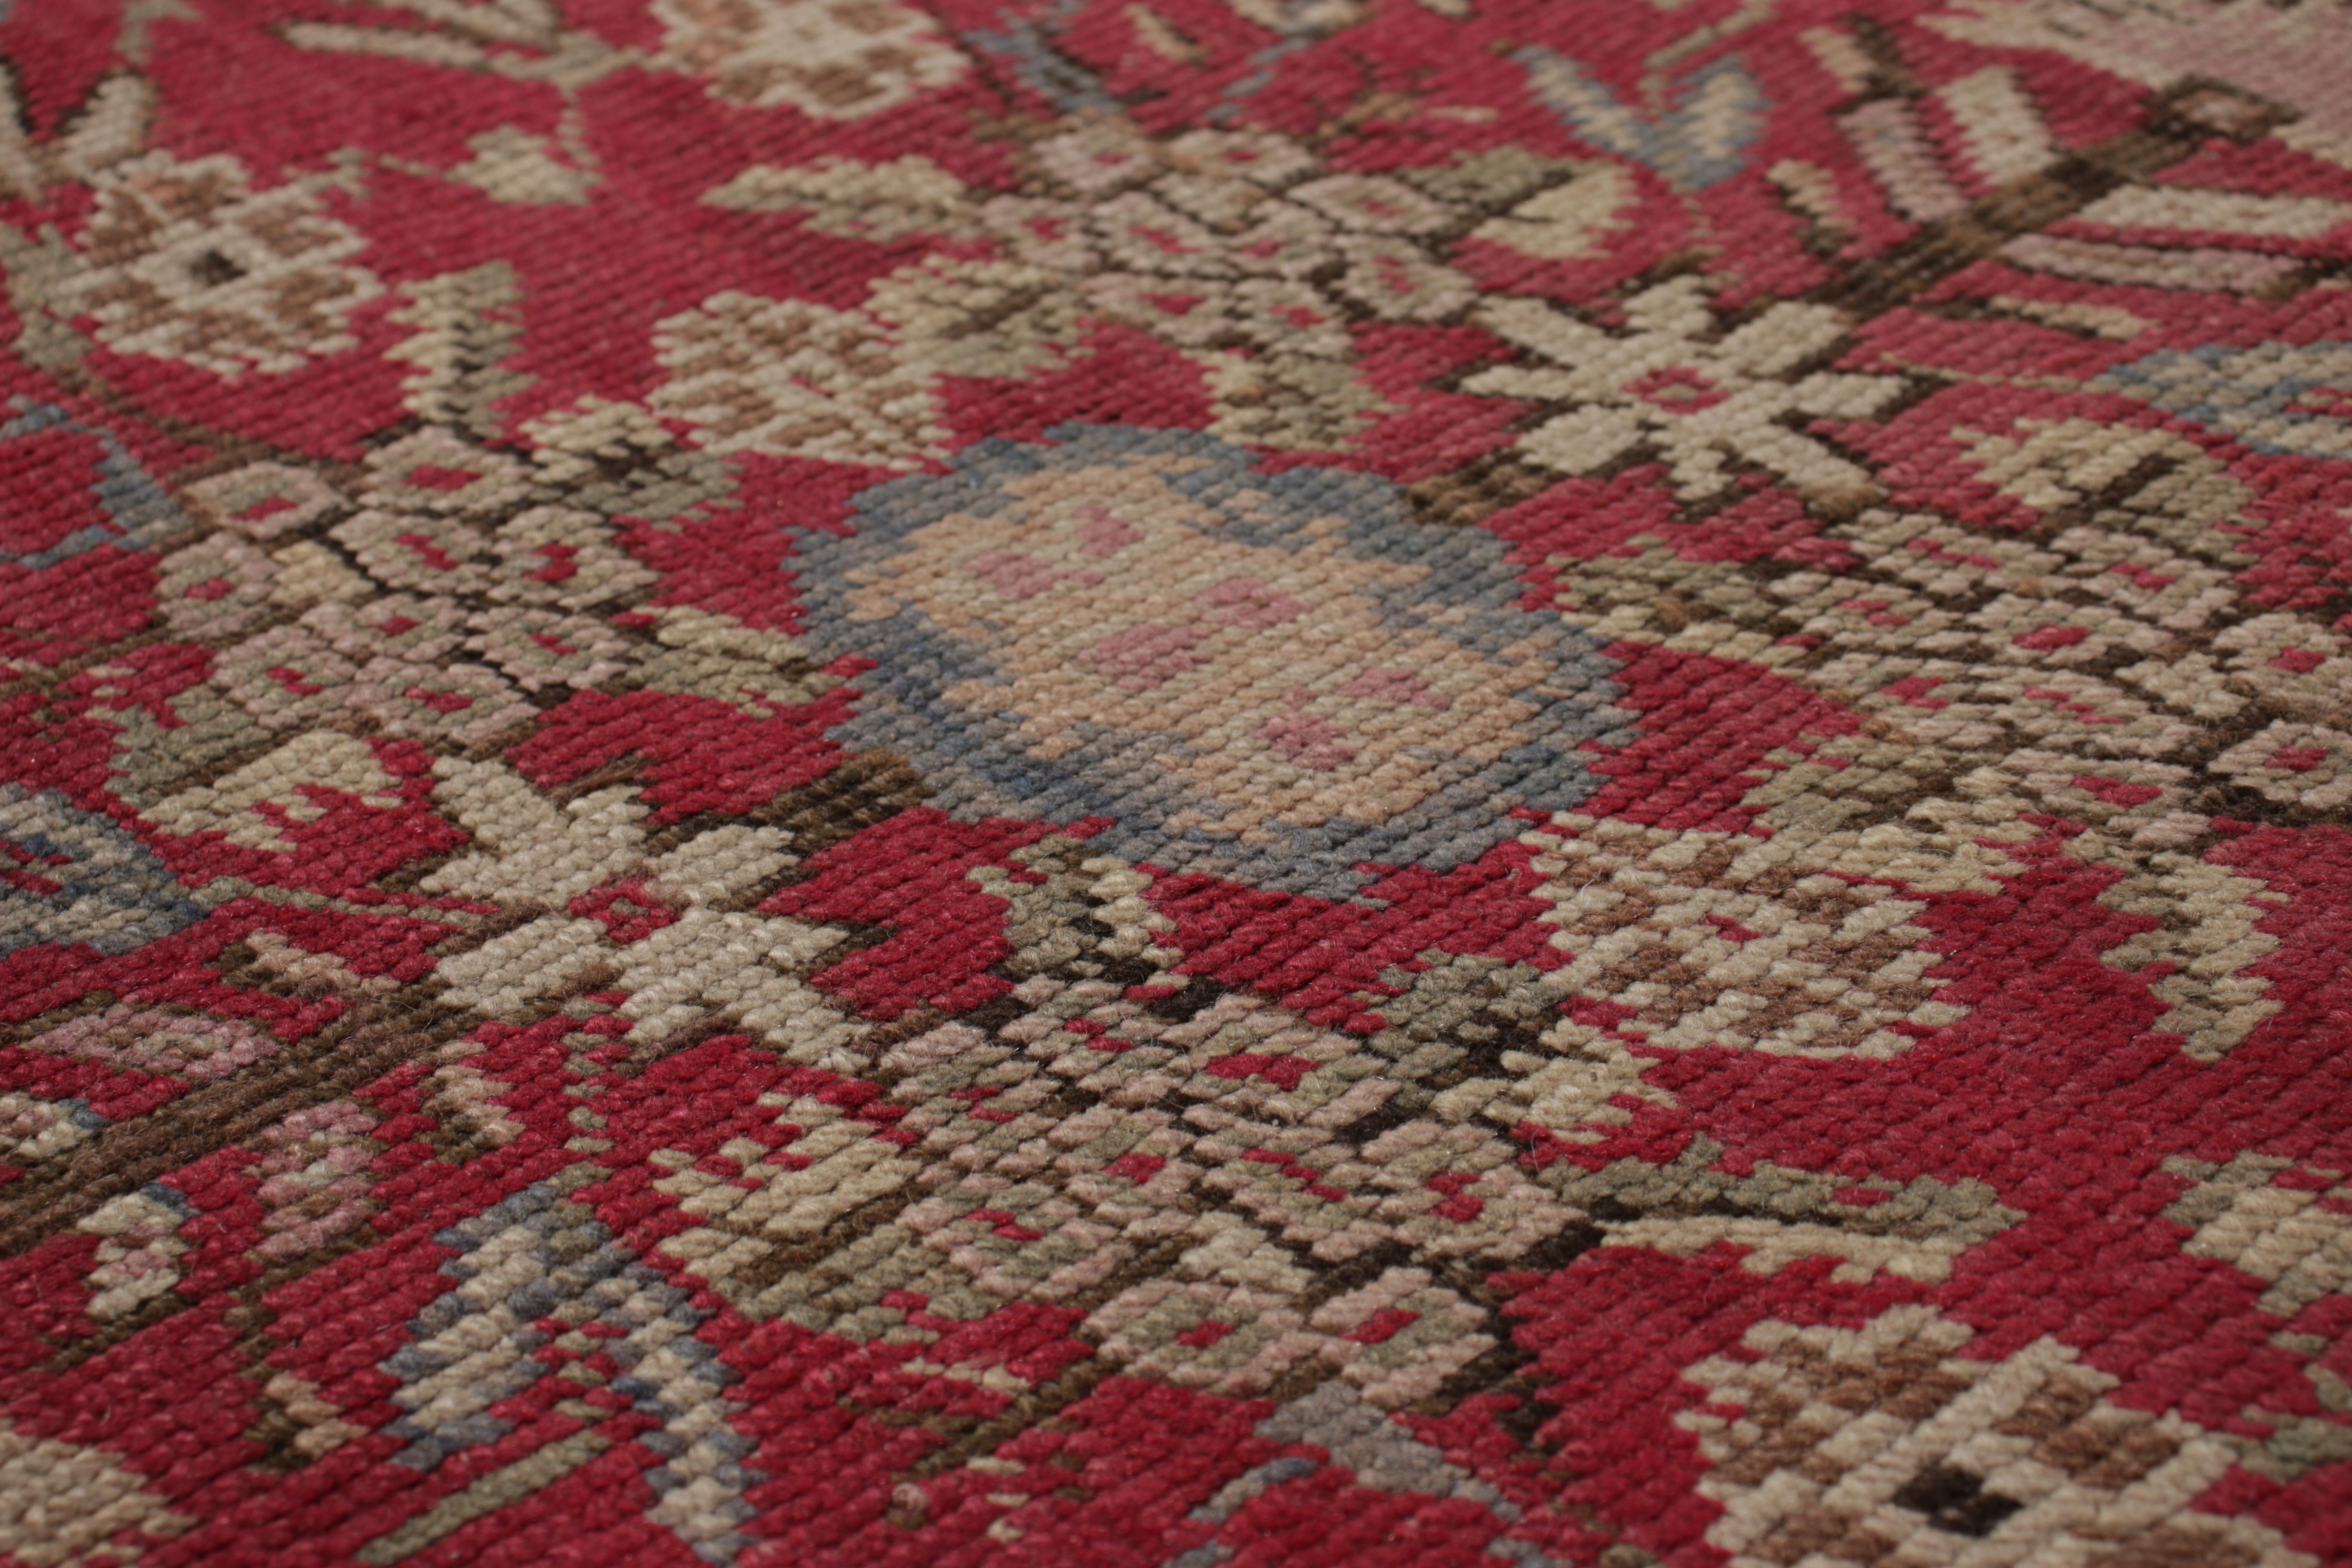 Primitive Hand Knotted Antique Gordes Rug Red and Beige Floral Pattern by Rug & Kilim For Sale